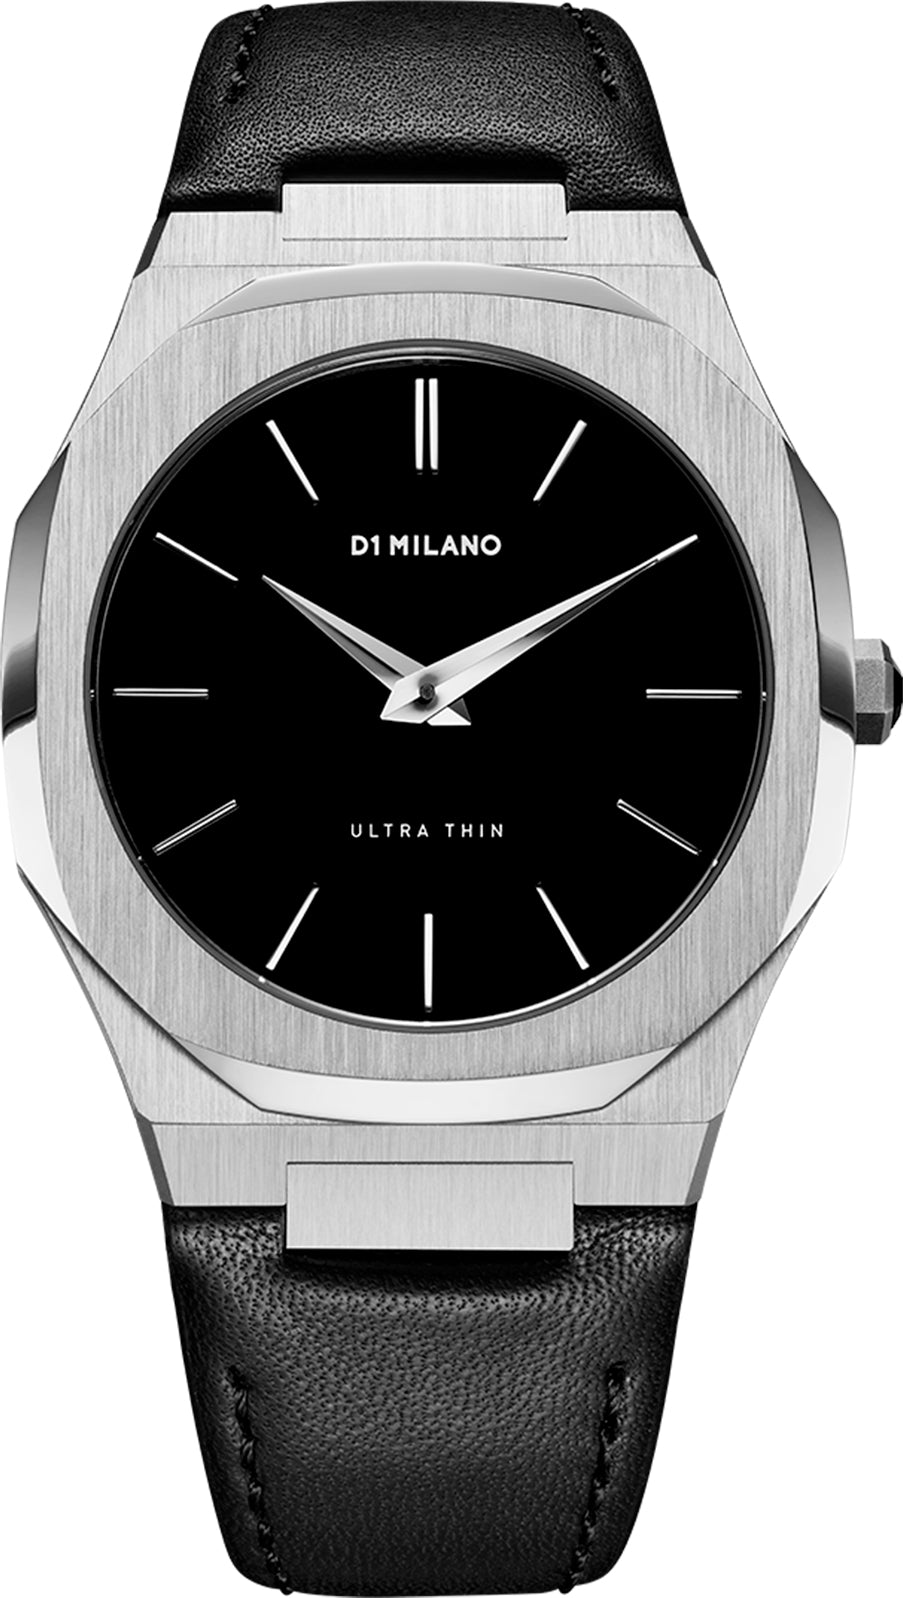 Photos - Wrist Watch Milano D1  Watch Ultra Thin DLM-044 